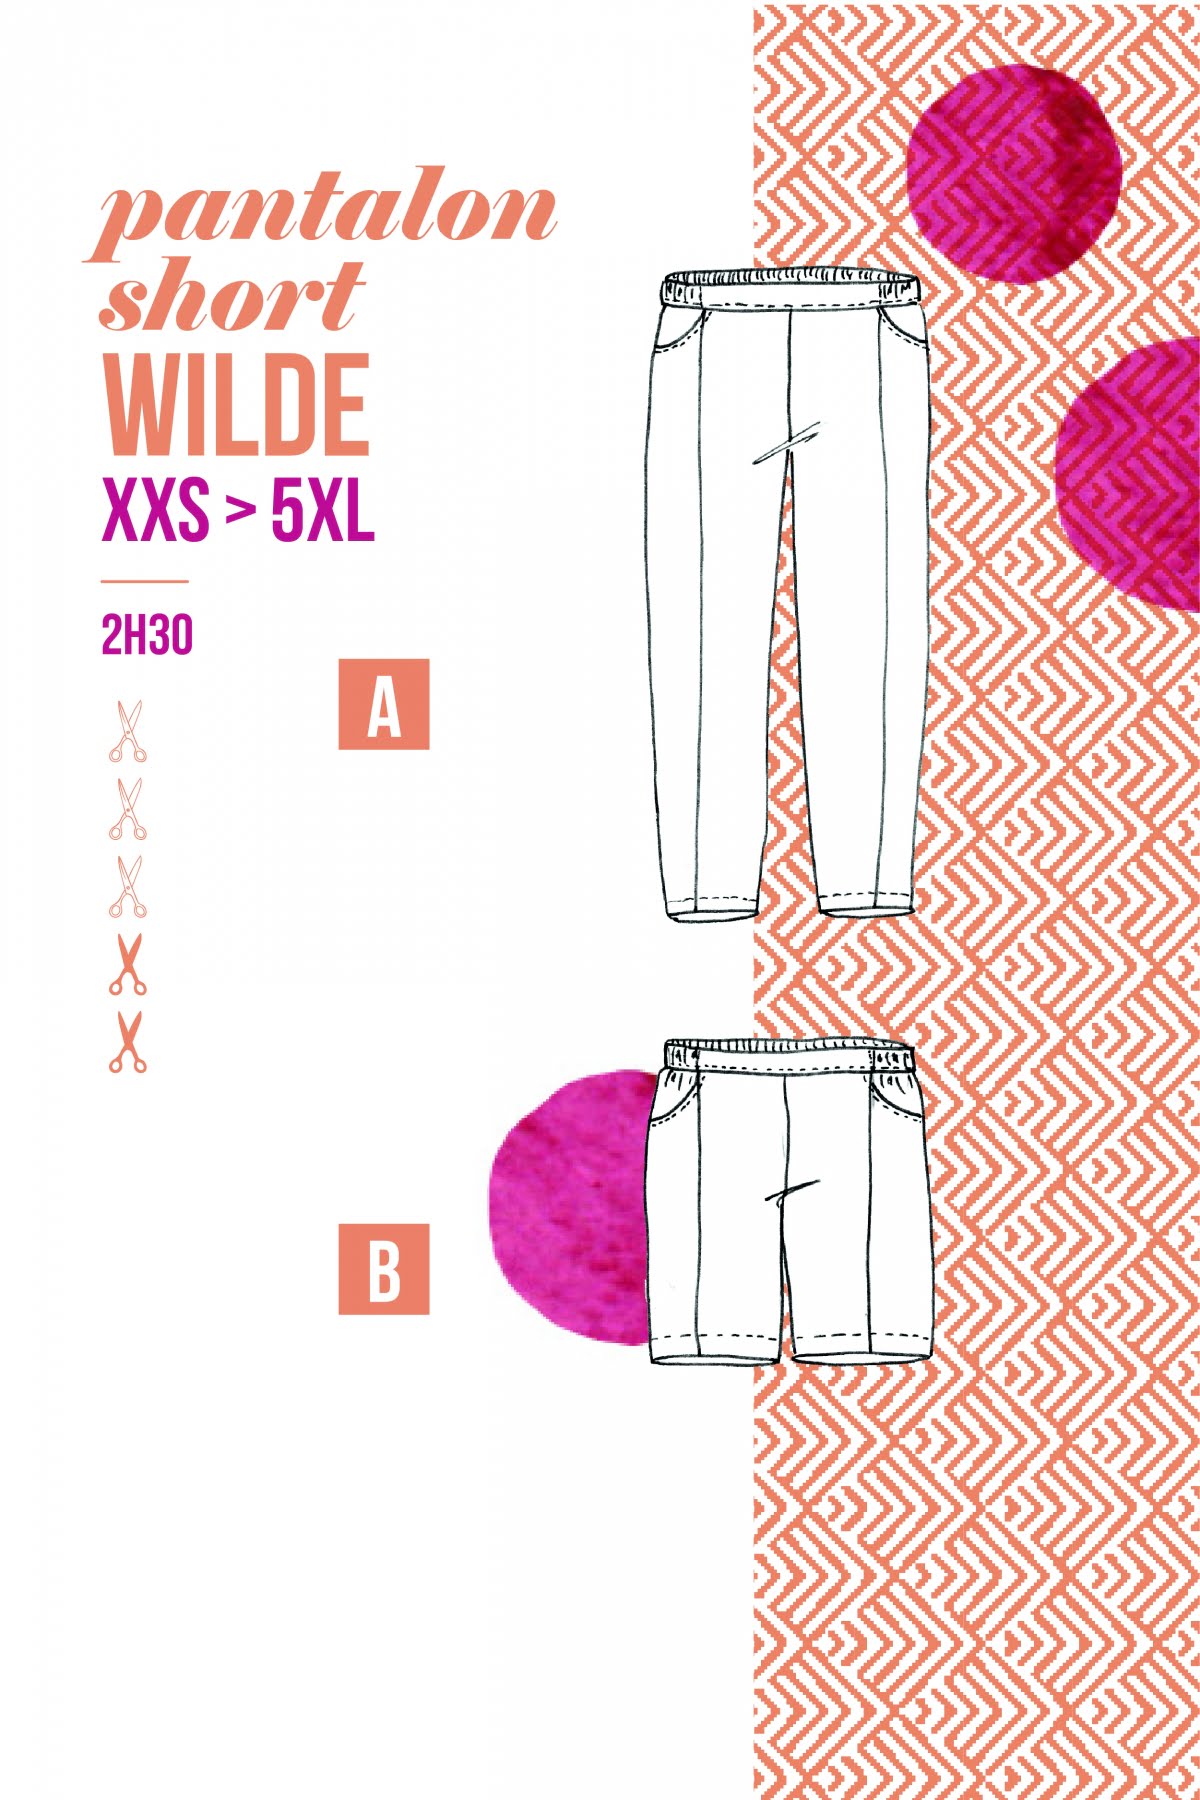 wilde-xxs-_5xl-H002-1600955992